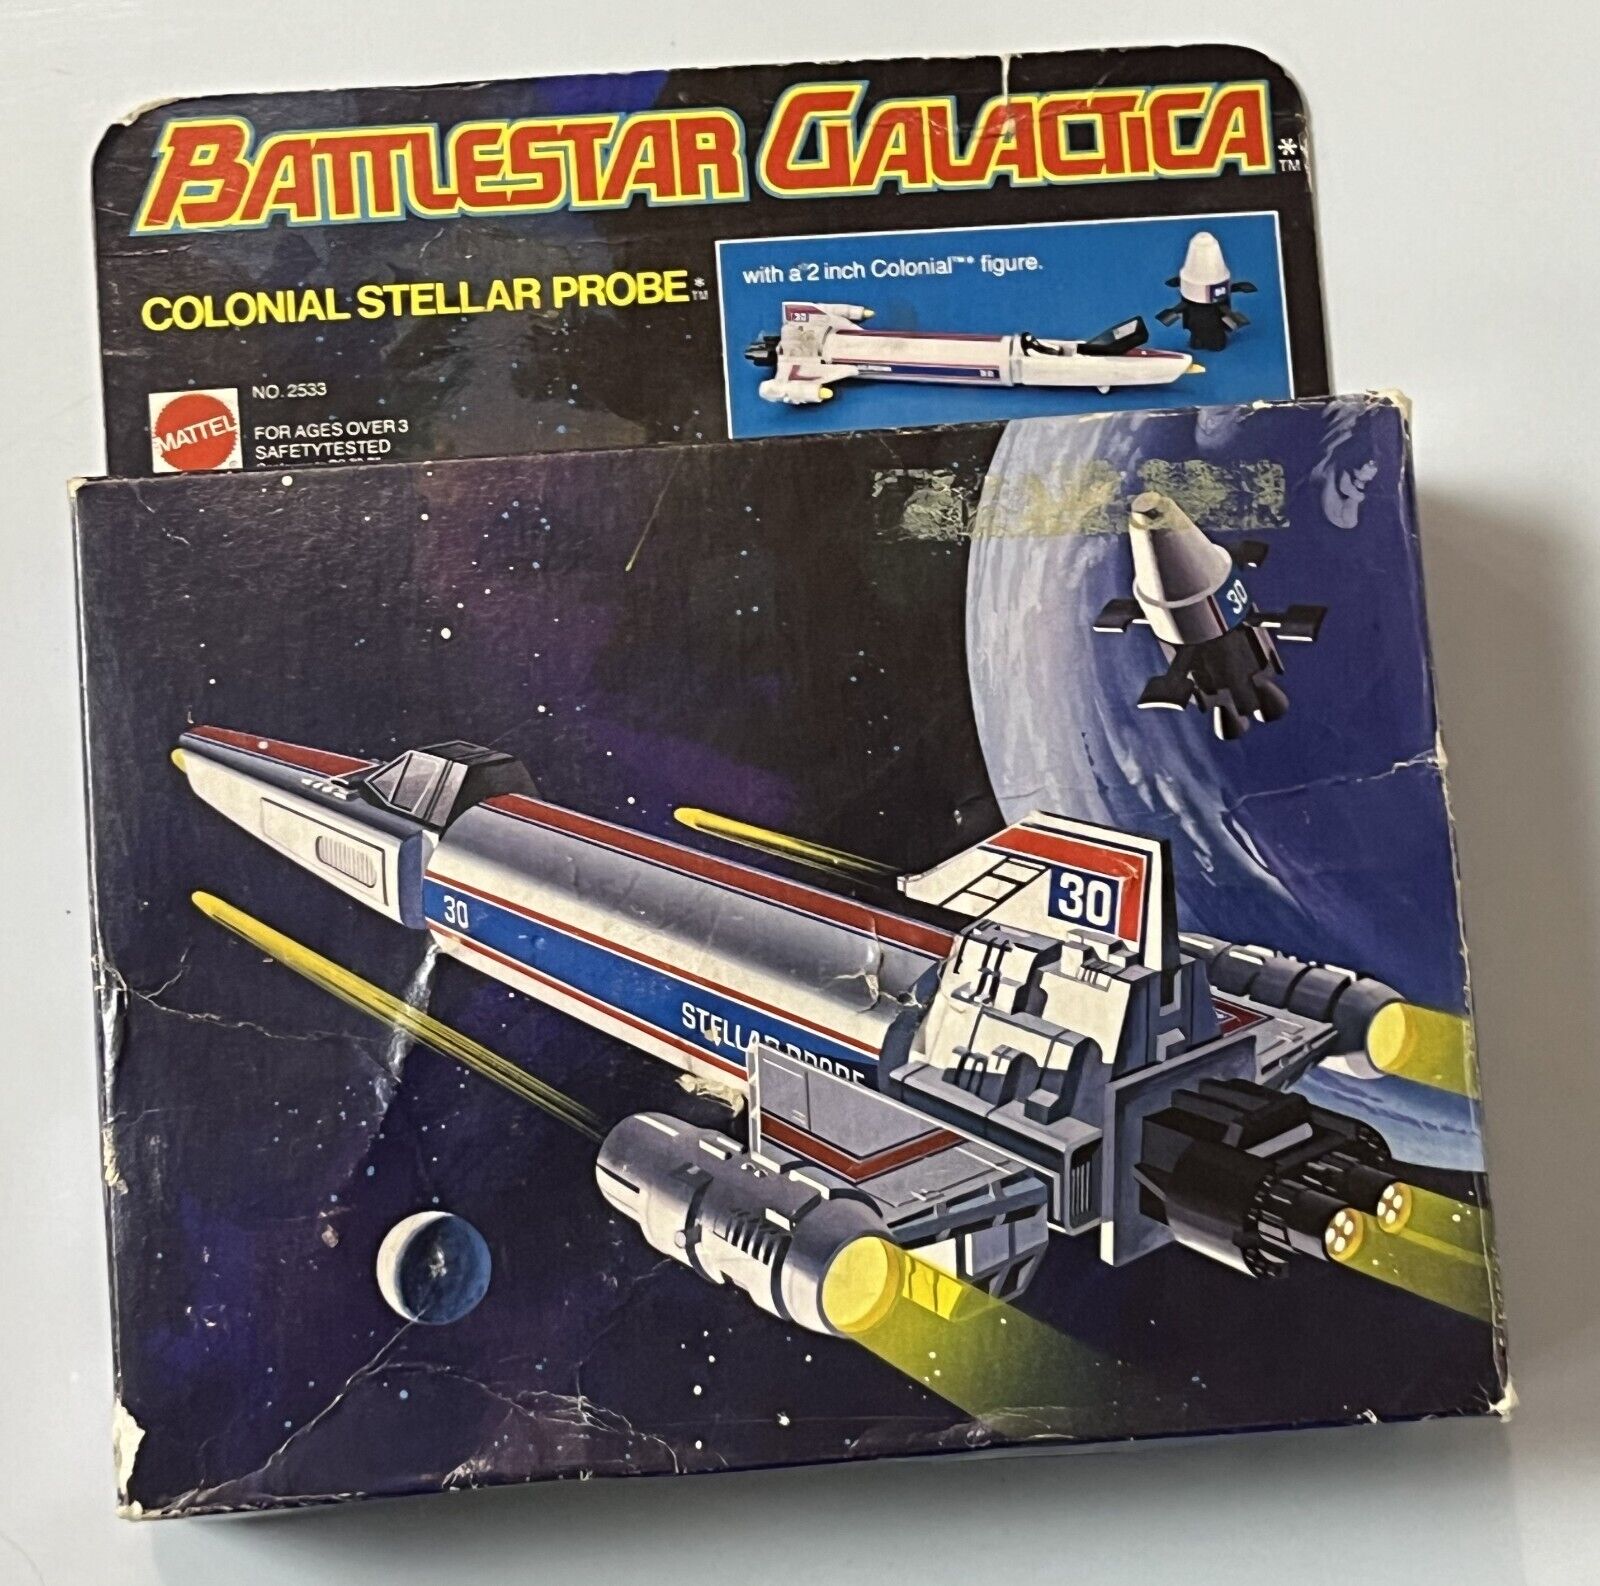 Original 1978 Mattel Battlestar Galactica Colonial Stellar Probe COMPLETE SET